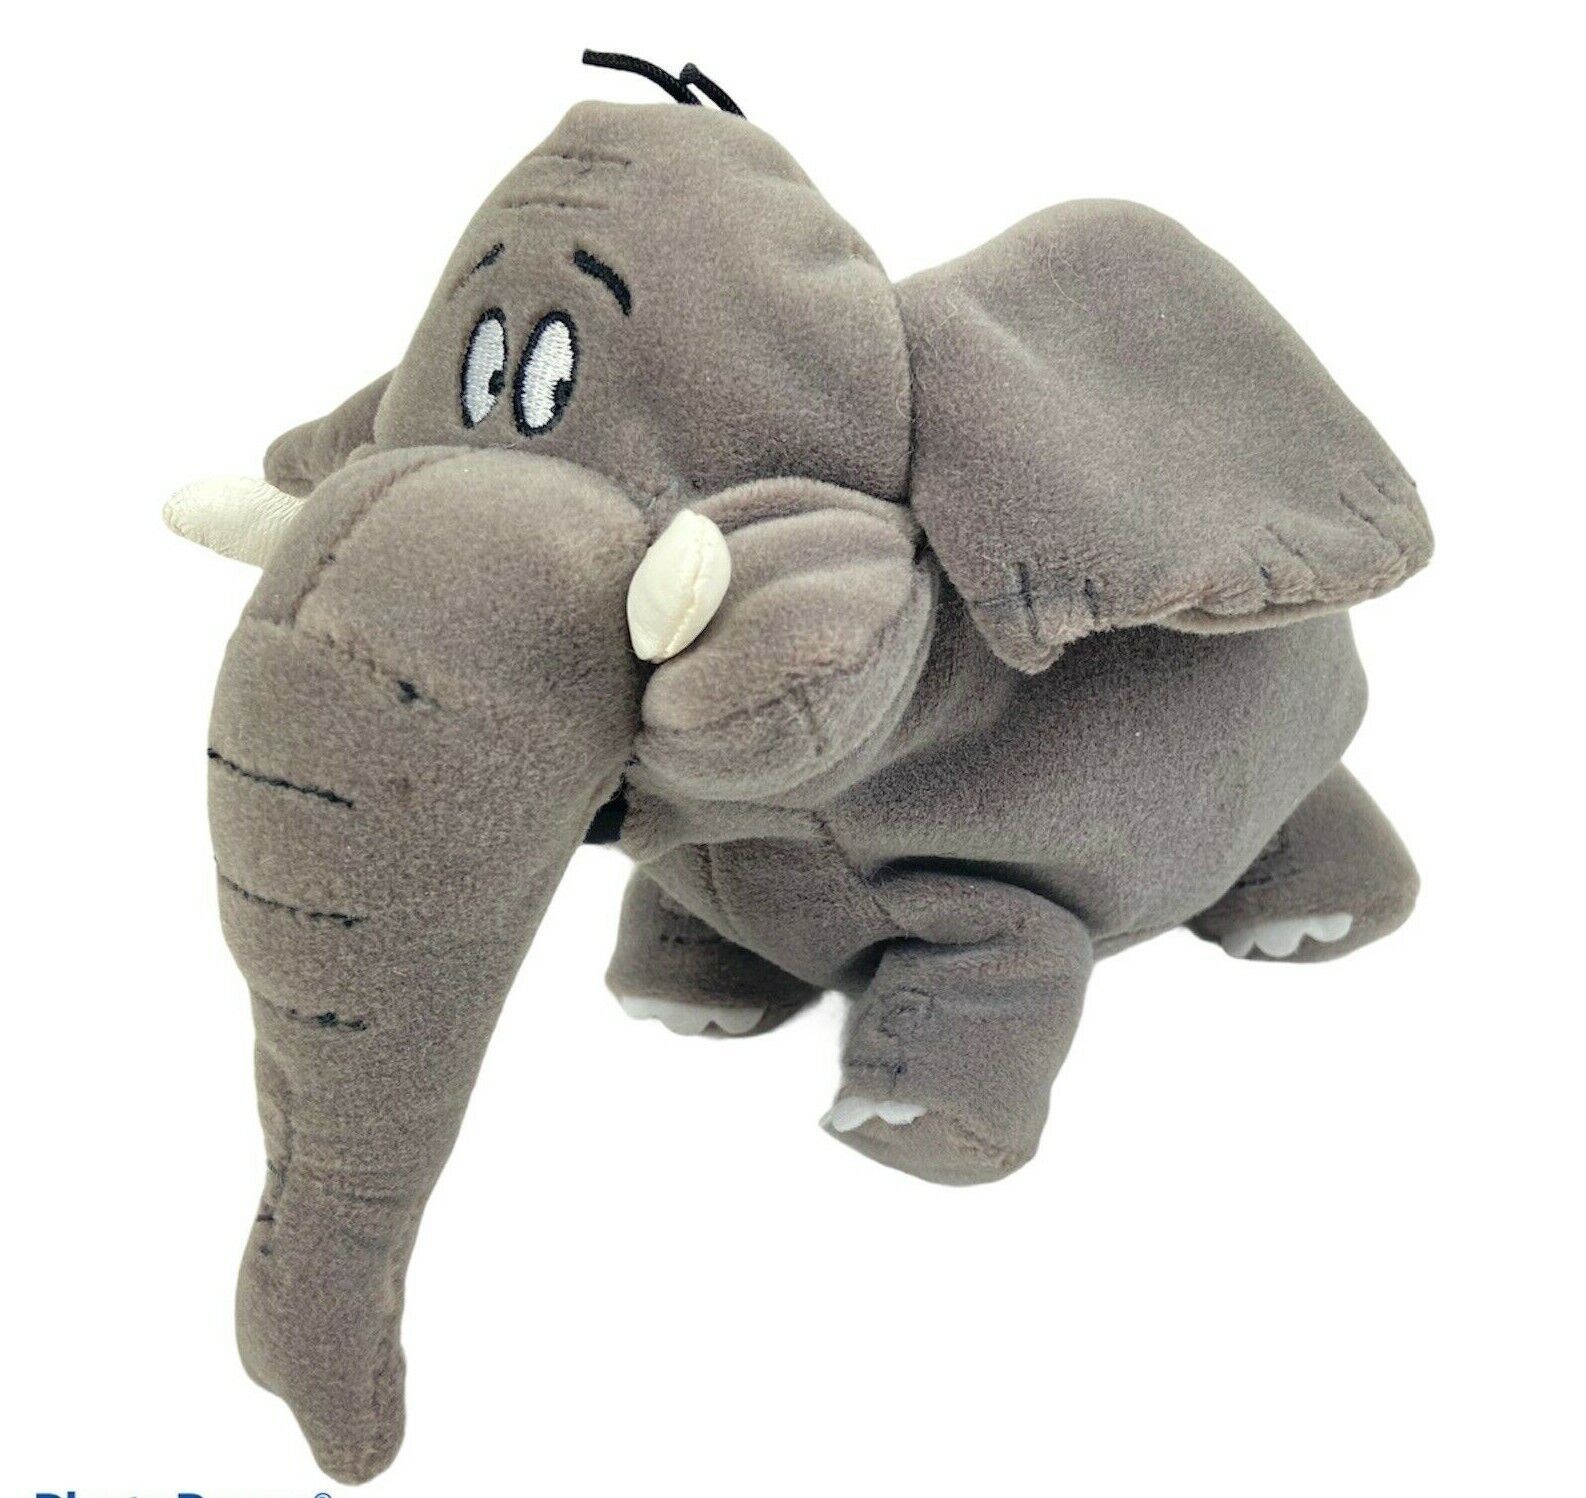 Primary image for Disney Elephant Bean Bag Plush George of the Jungle Shep Stuffed Animal Toy Gray